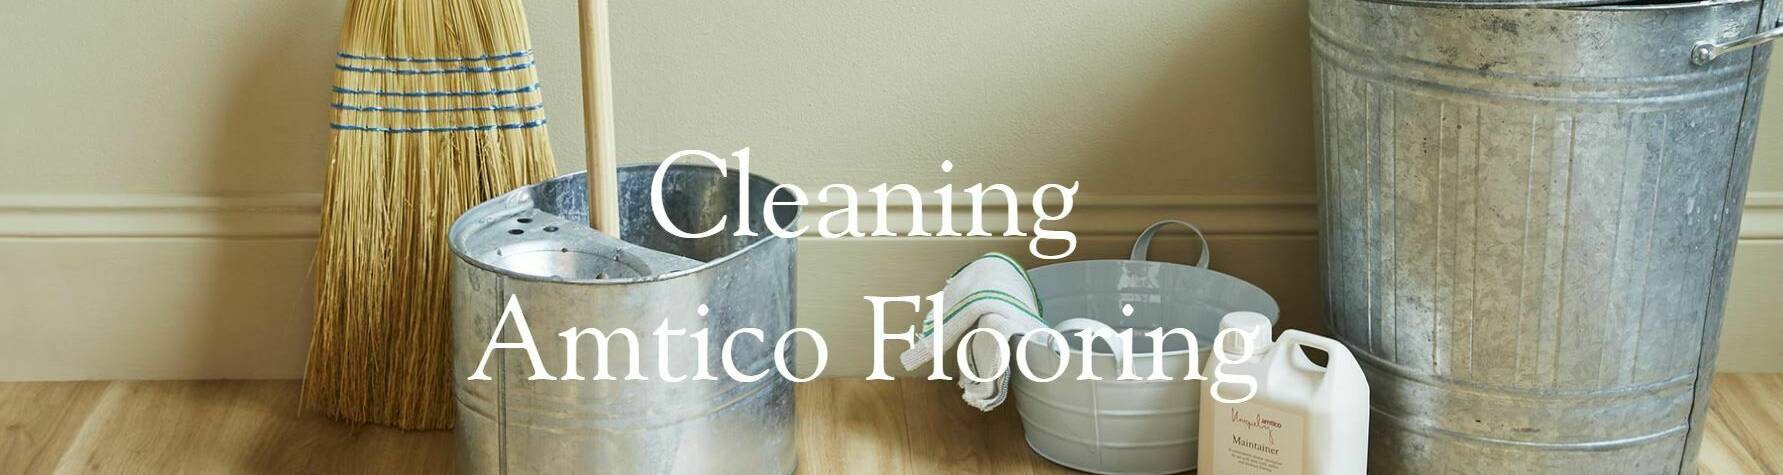 Cleaning Amtico Flooring